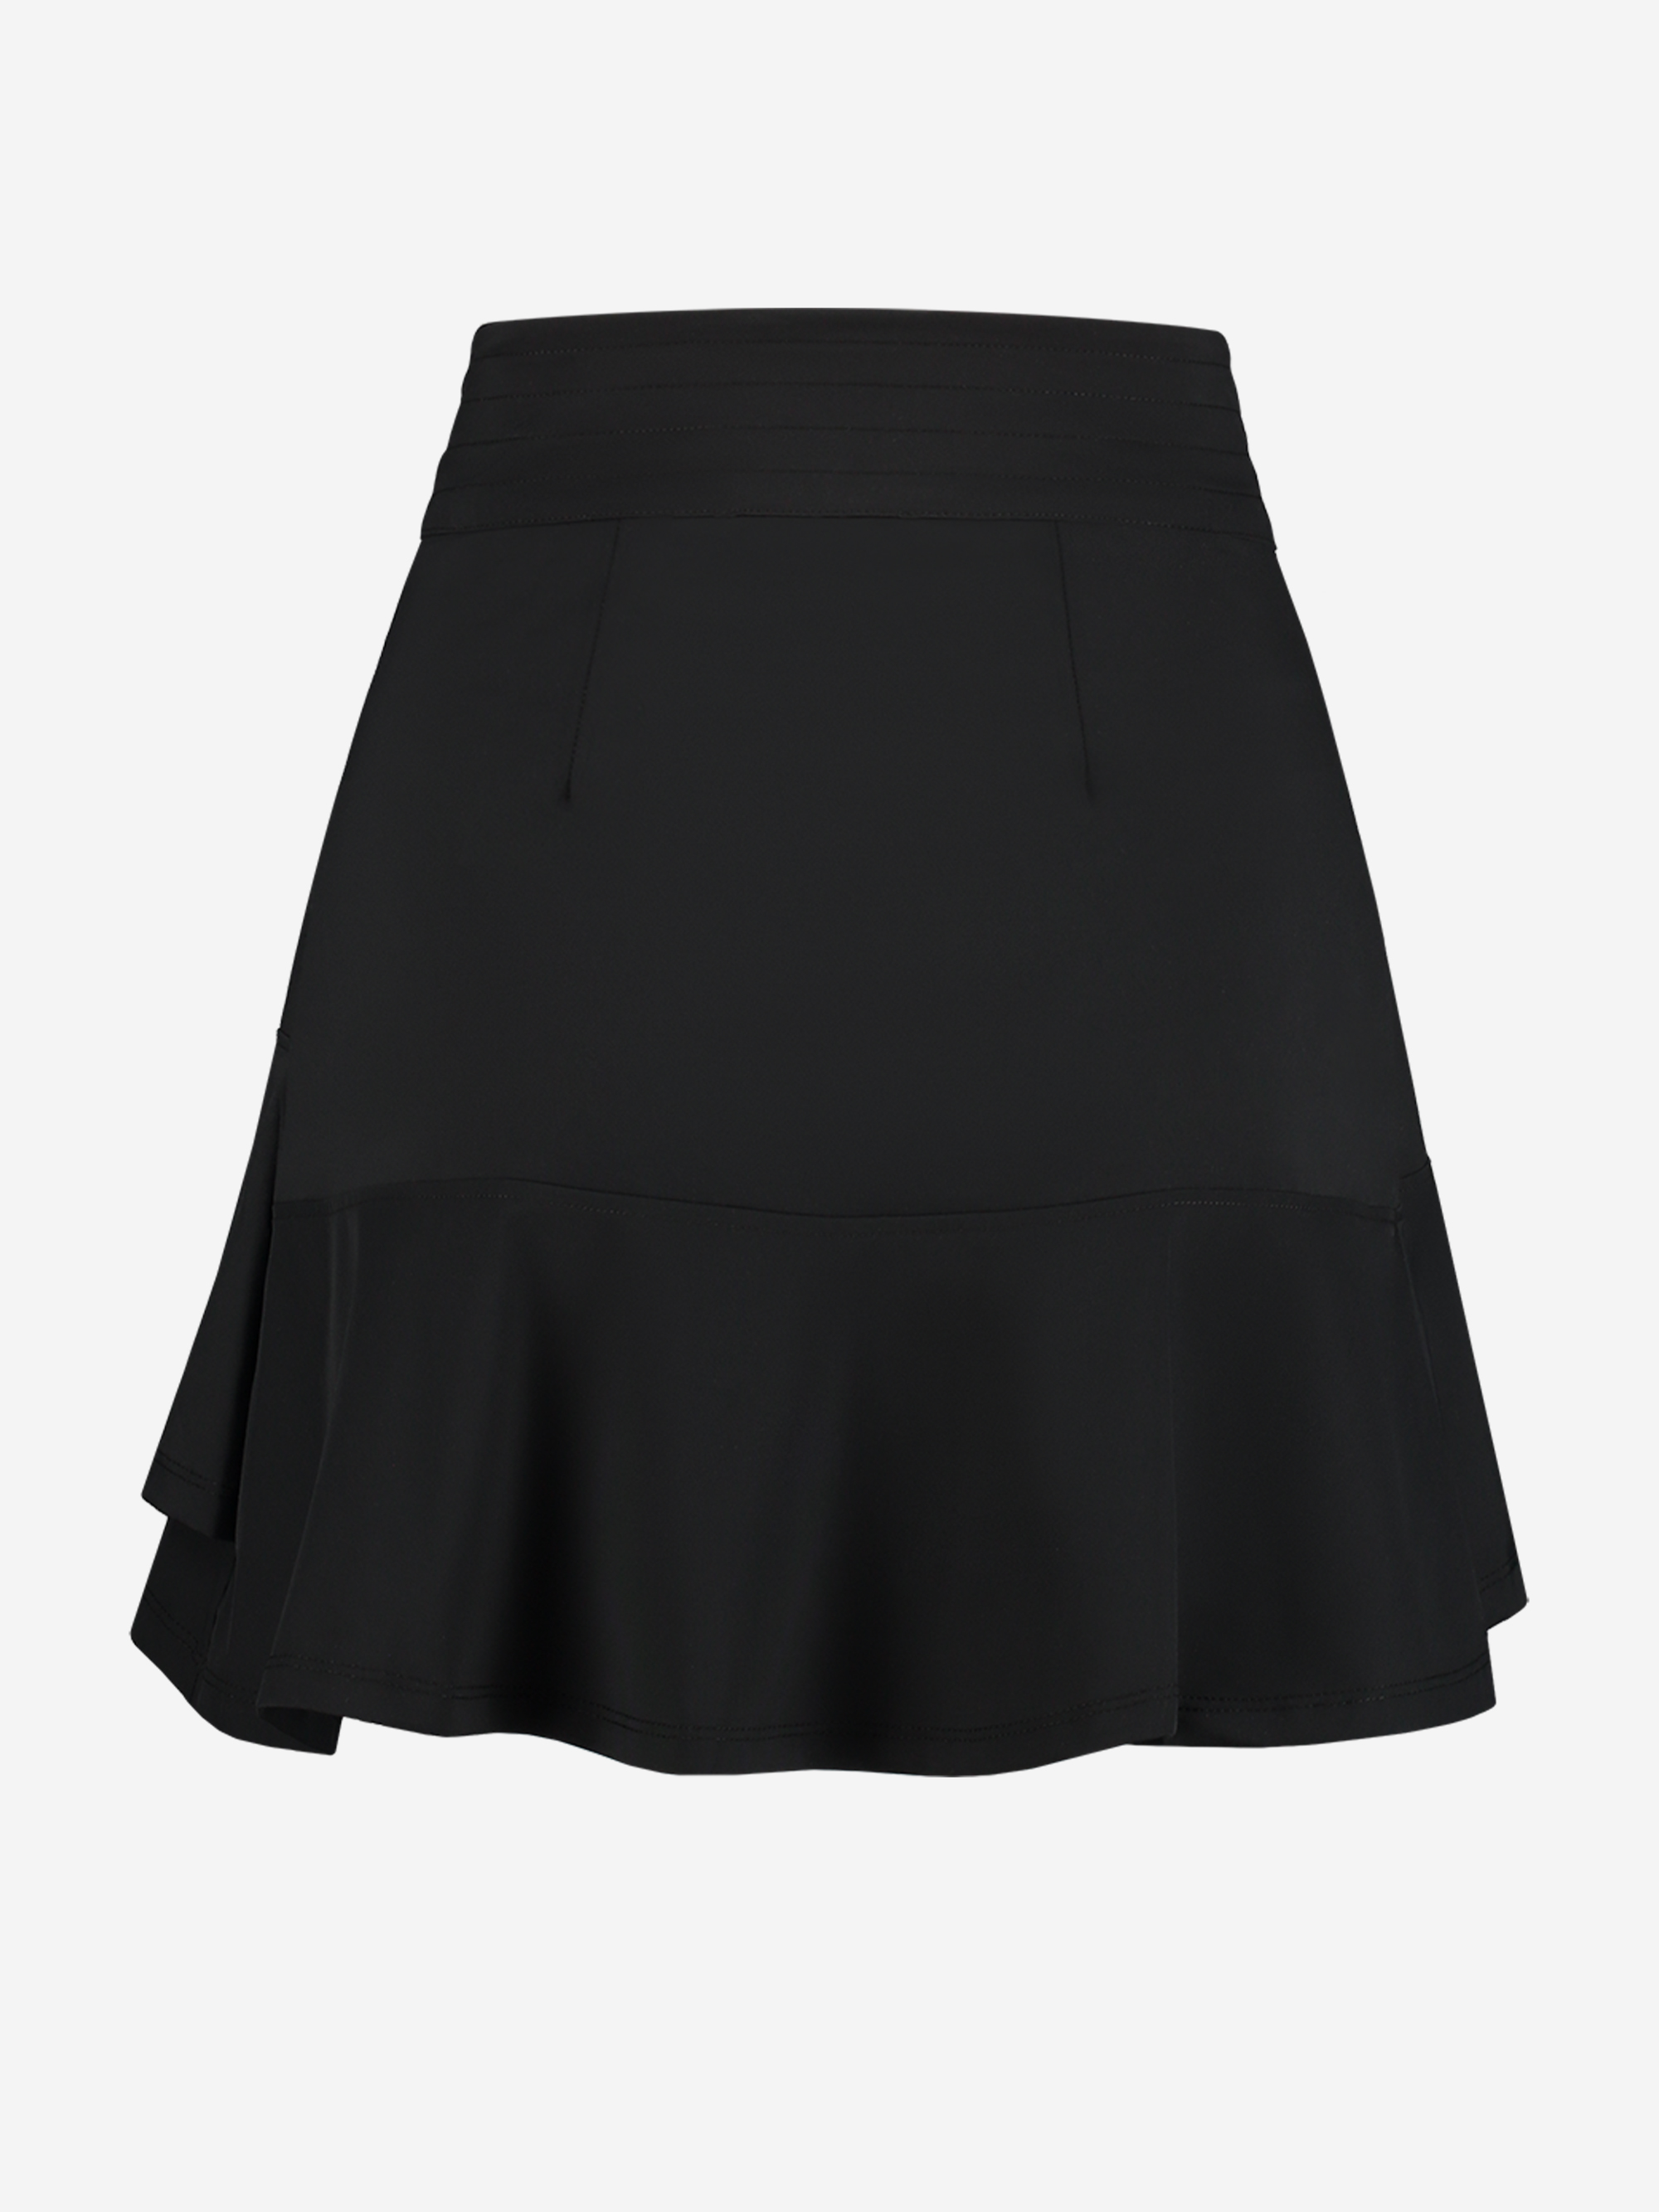 Suzy Warrior Skirt